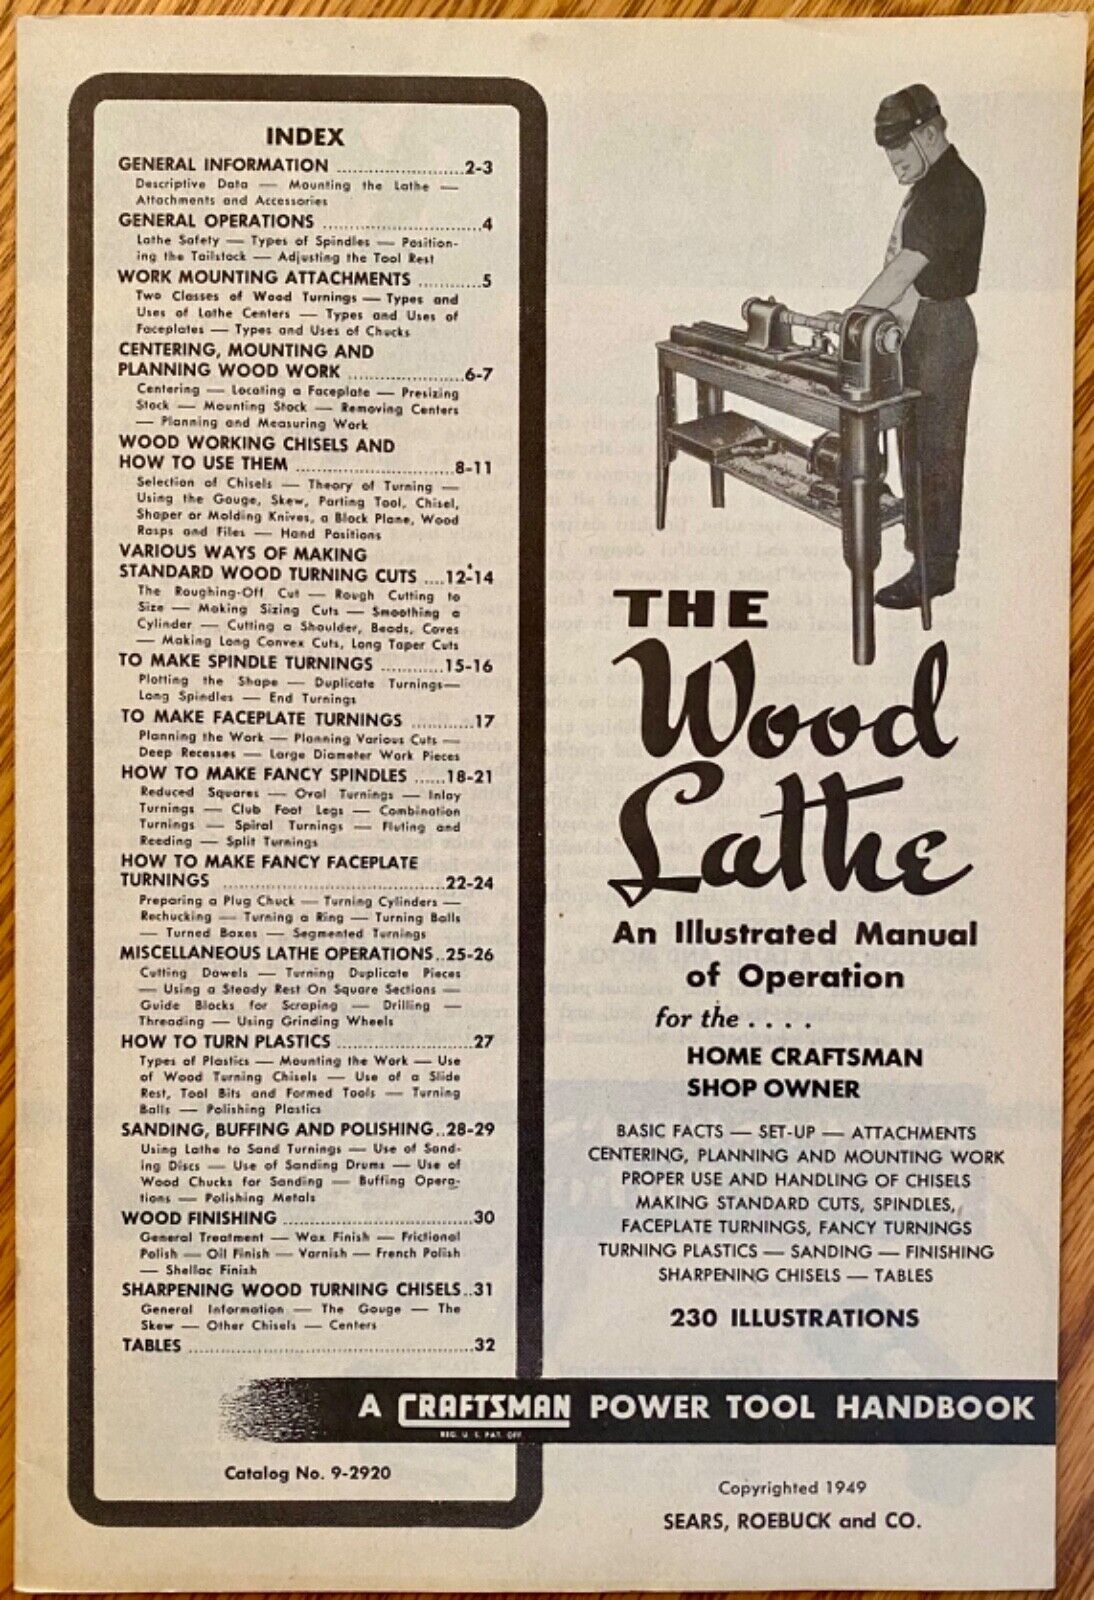 Vintage Craftsman 1949© “The Wood Lathe” Power Tool Handbook